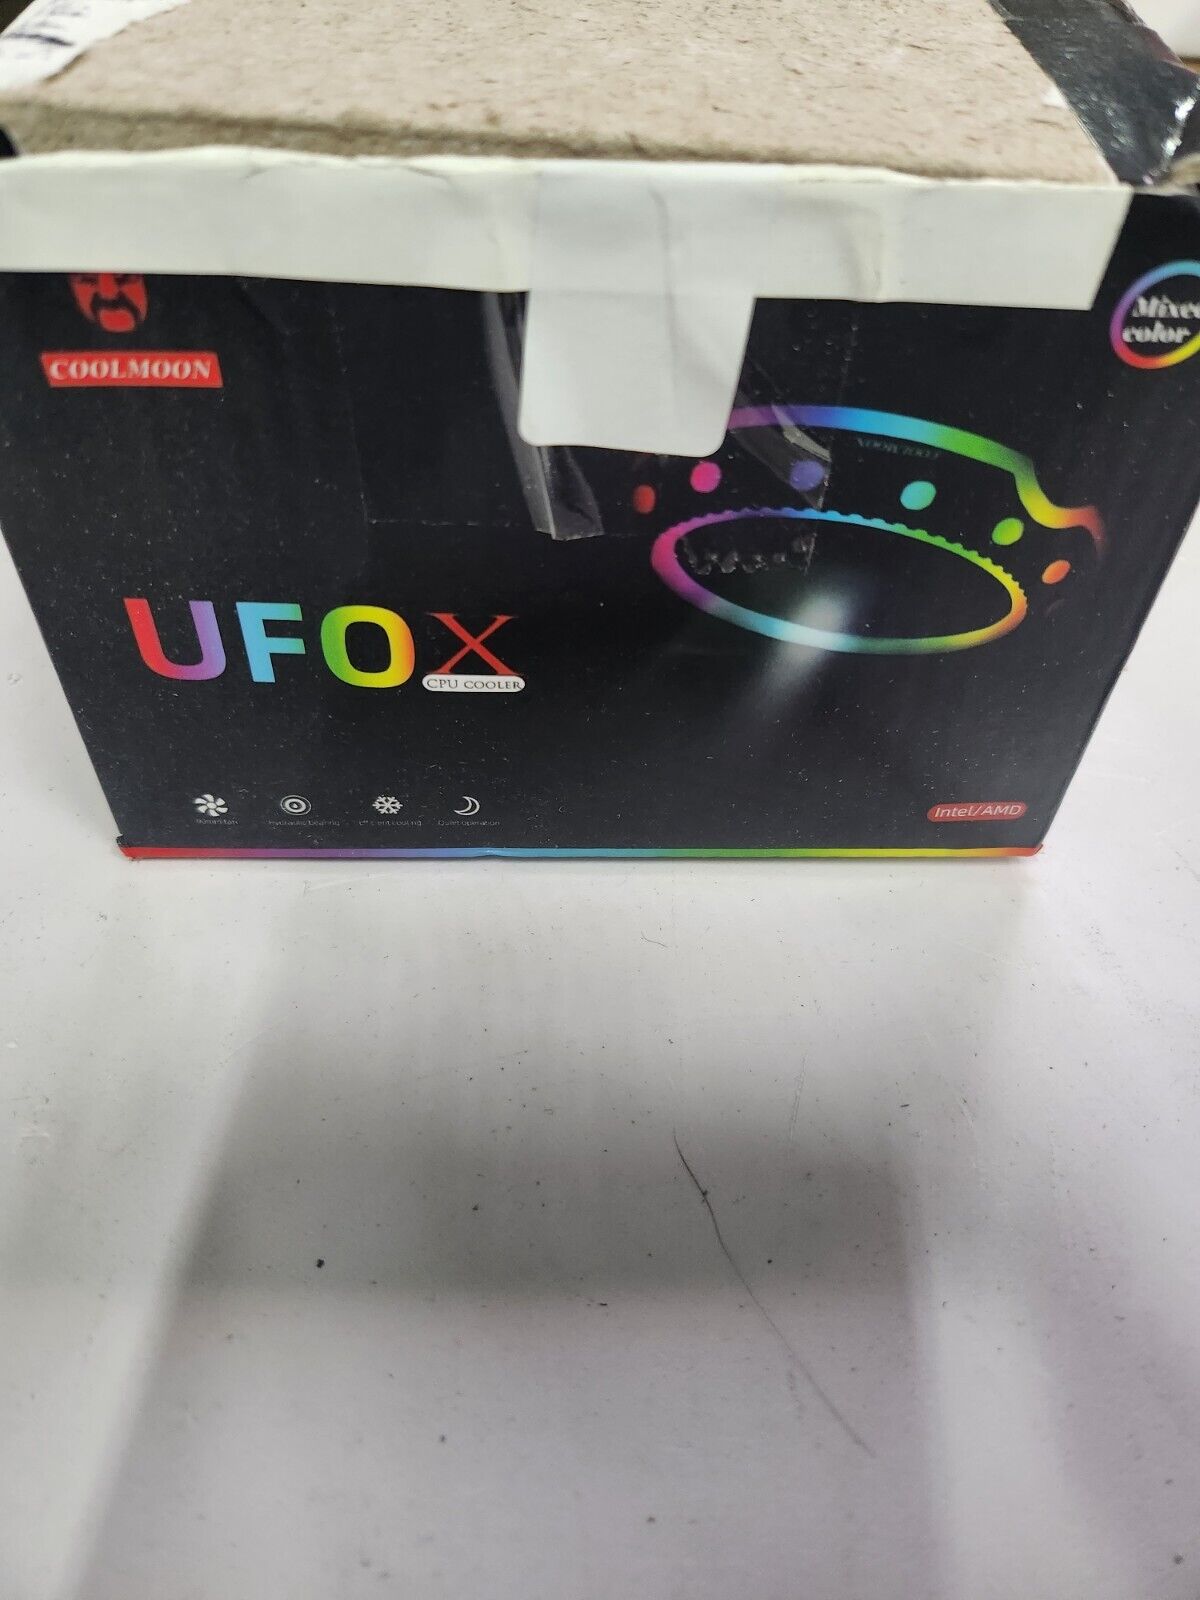 UFO Style Symphony LED RGB CPU Cooler Fan